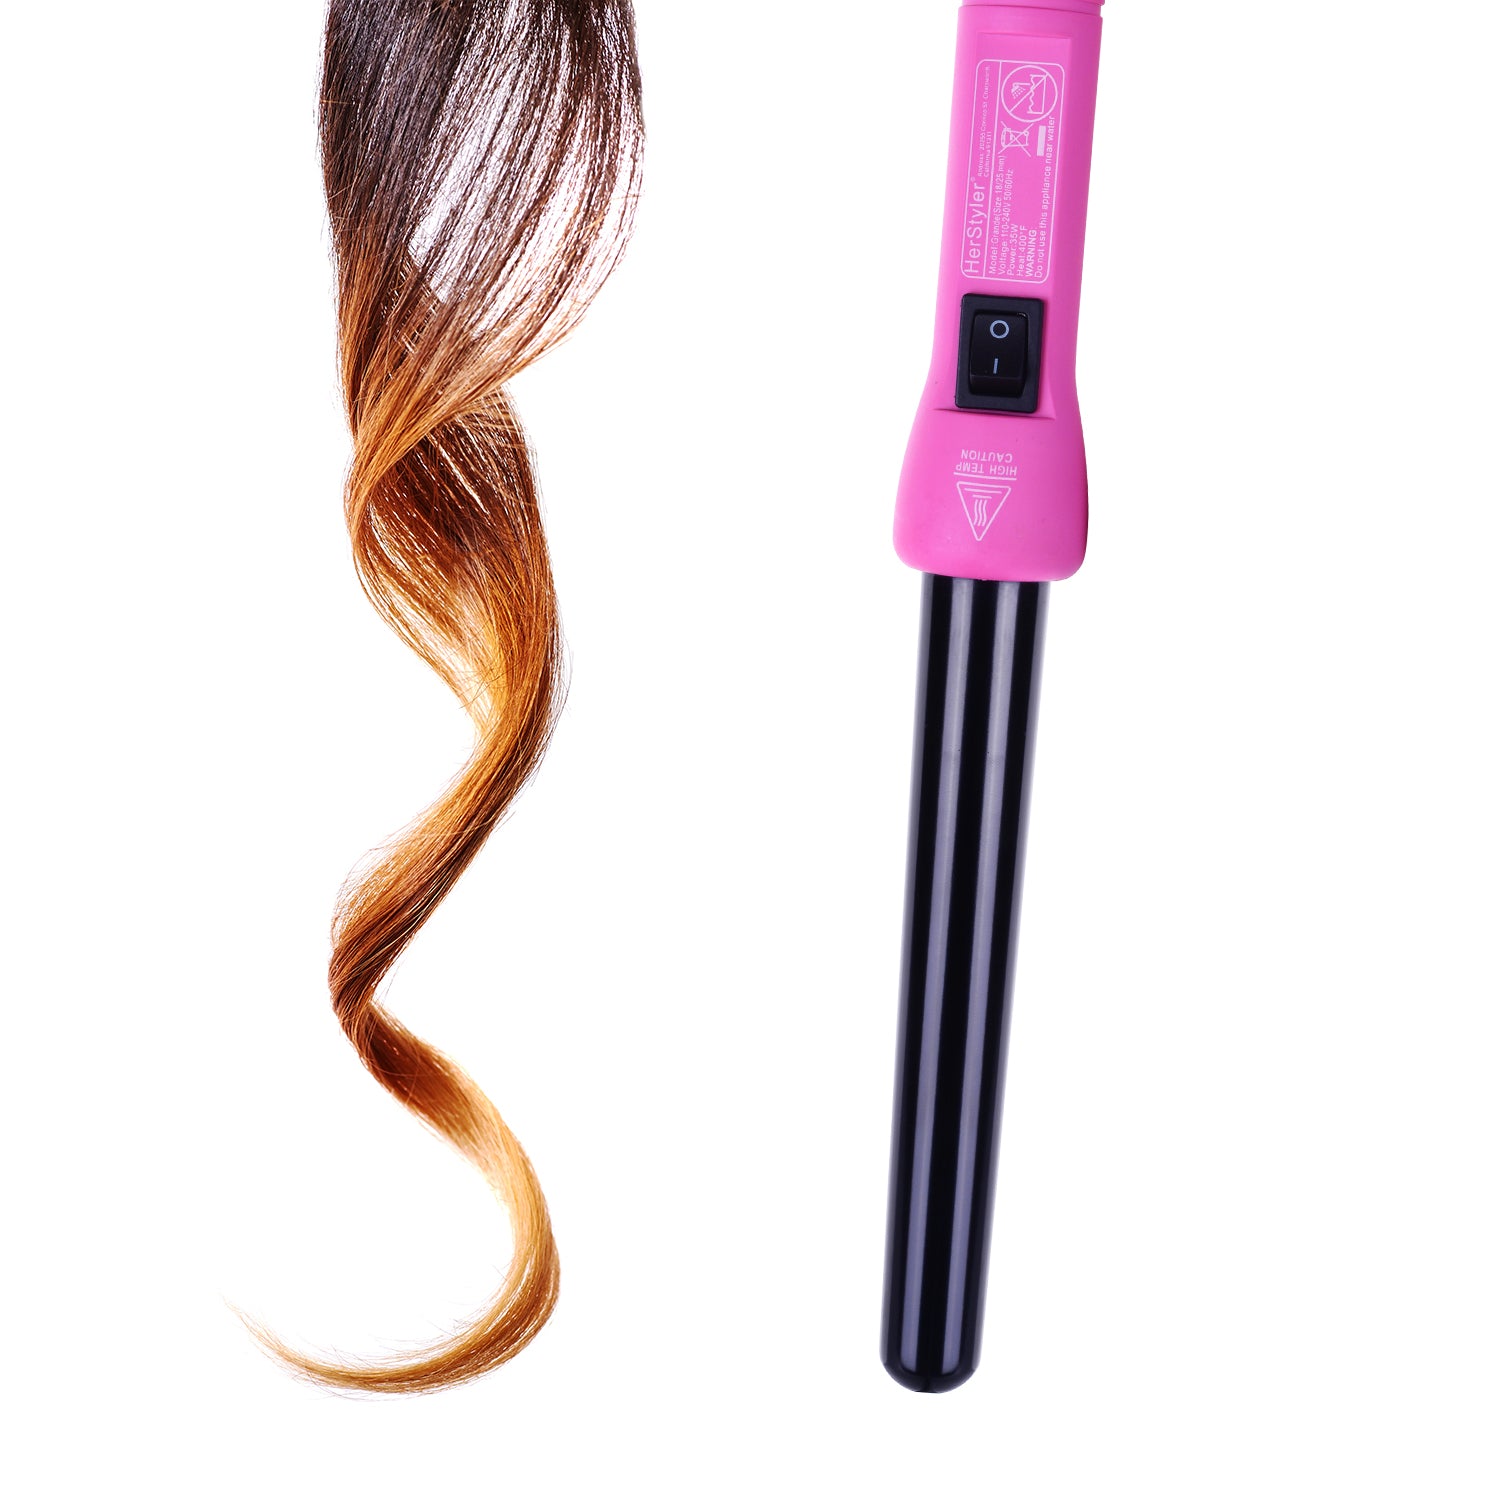 herstyler grande curls pink